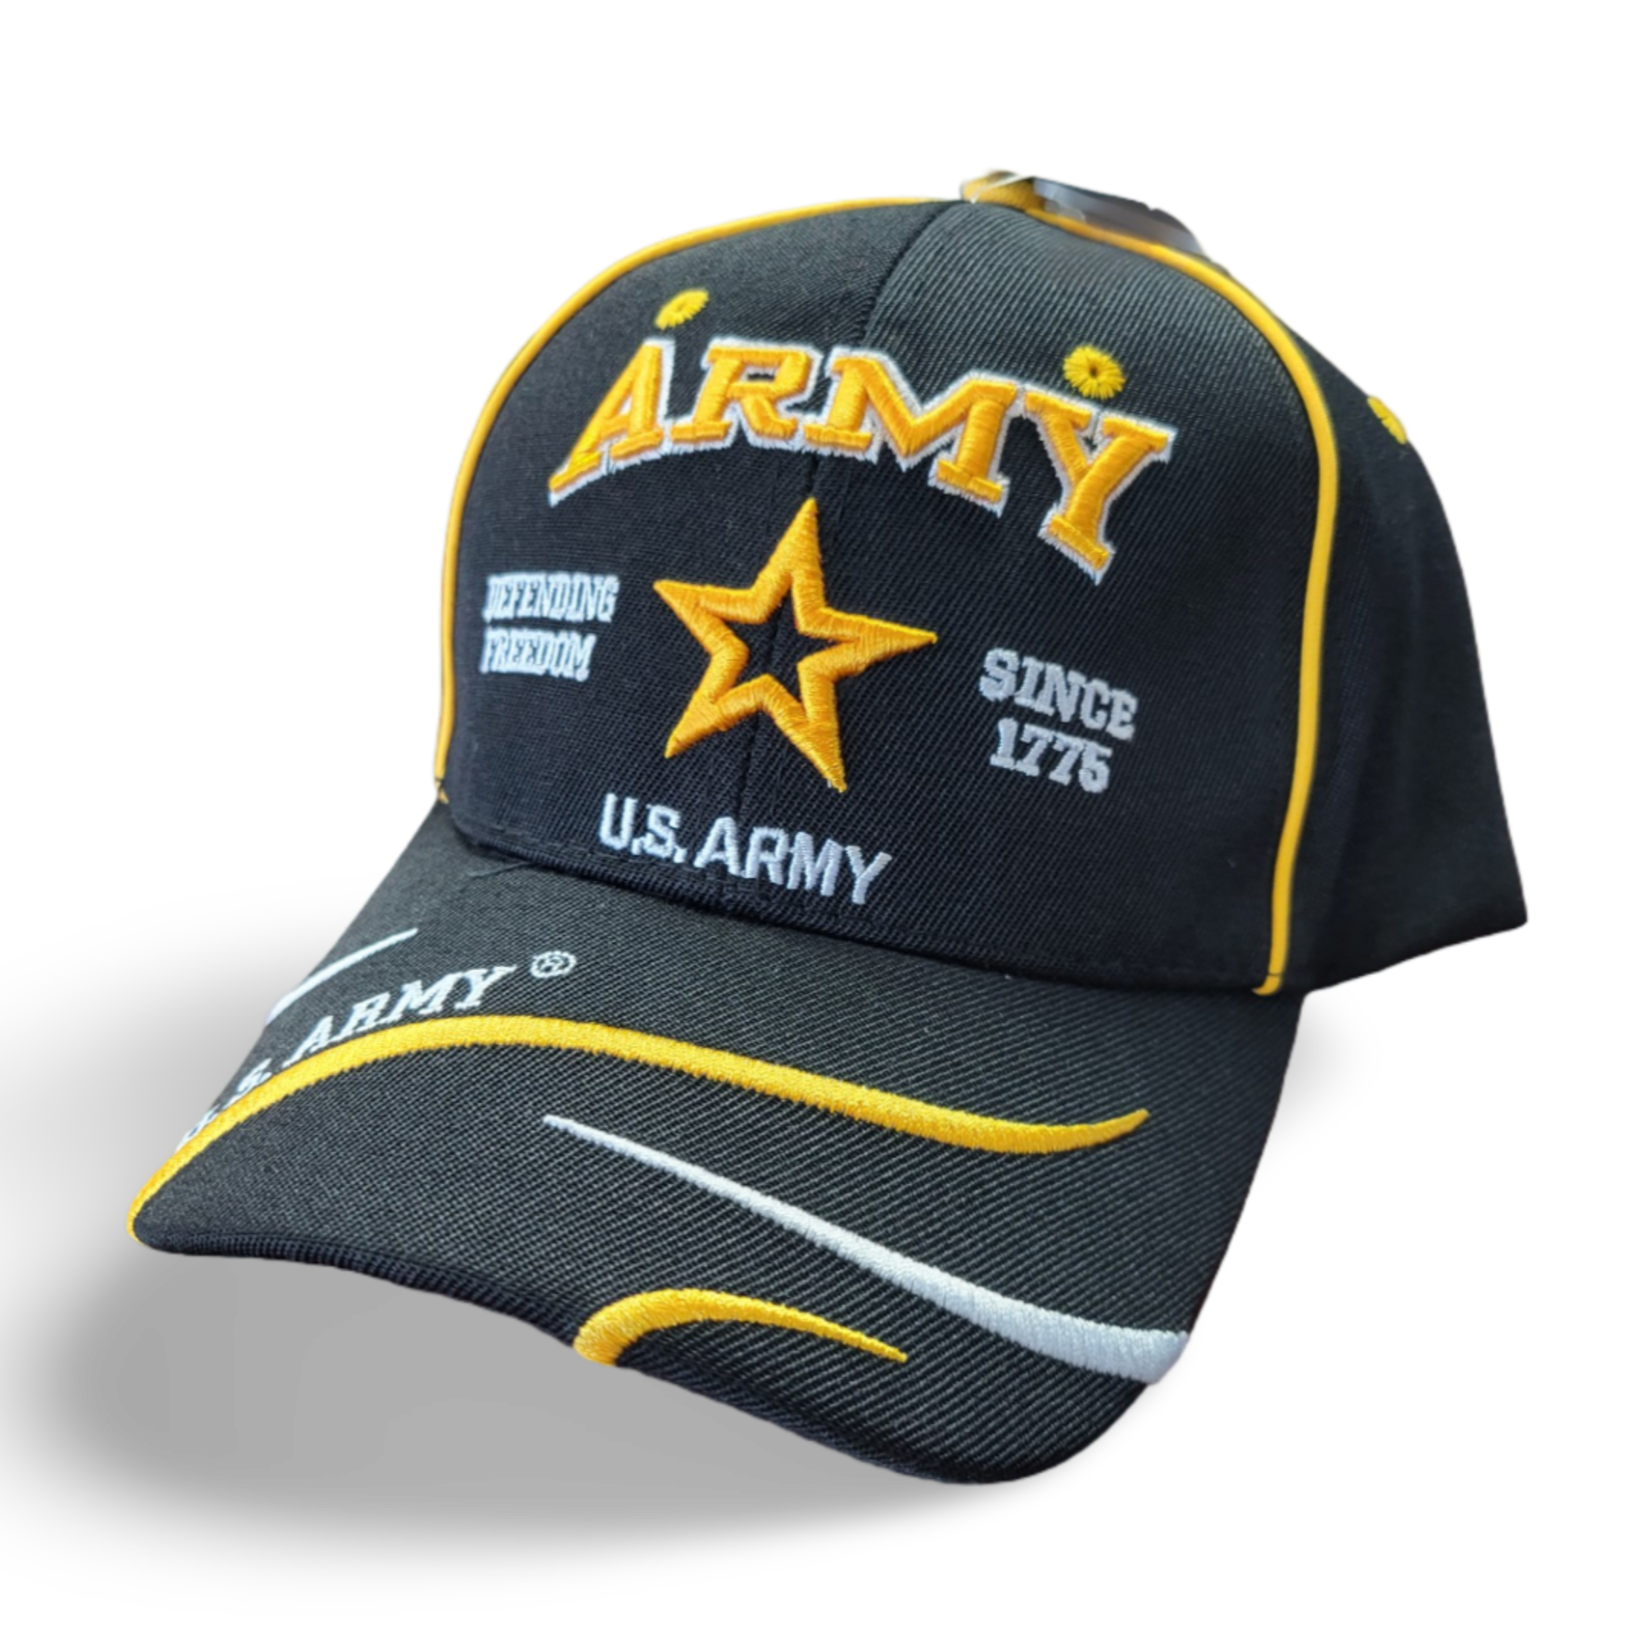 U.S. Army Since 1775 Hat